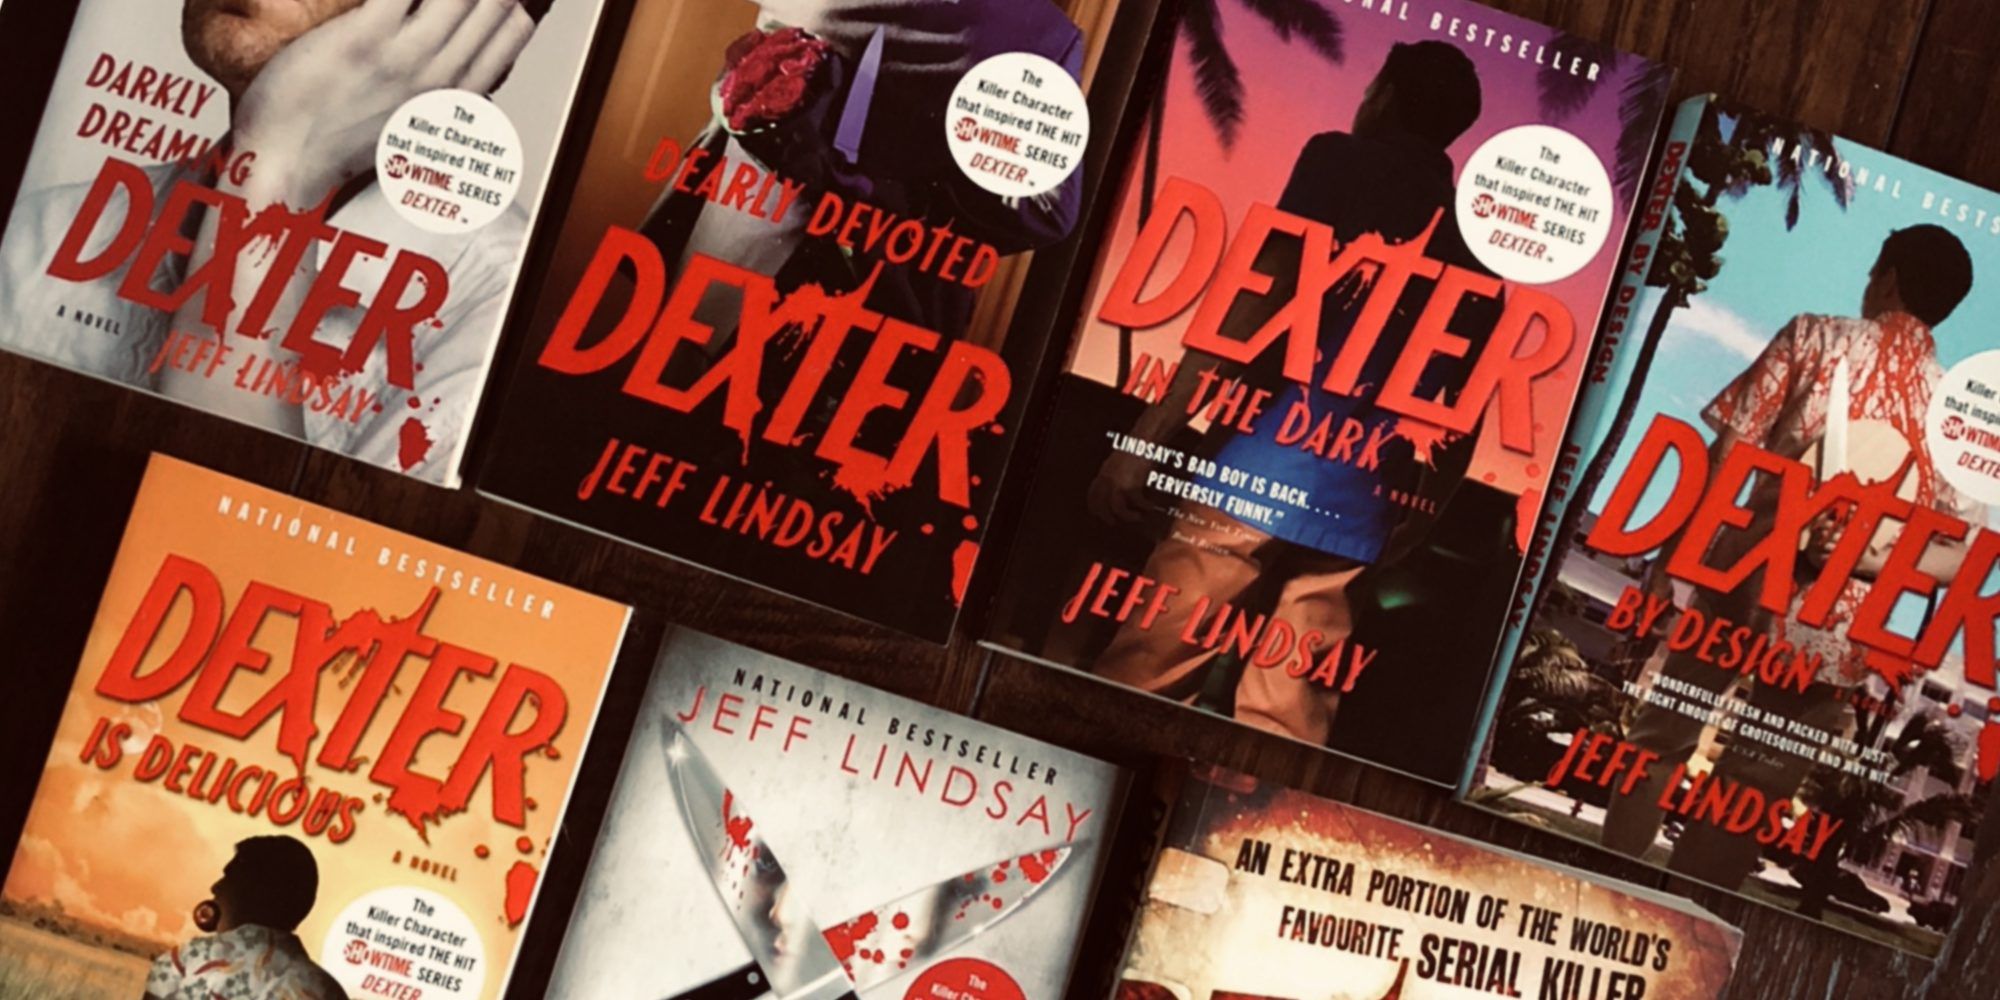 Dexter books by Jeff Lindsay